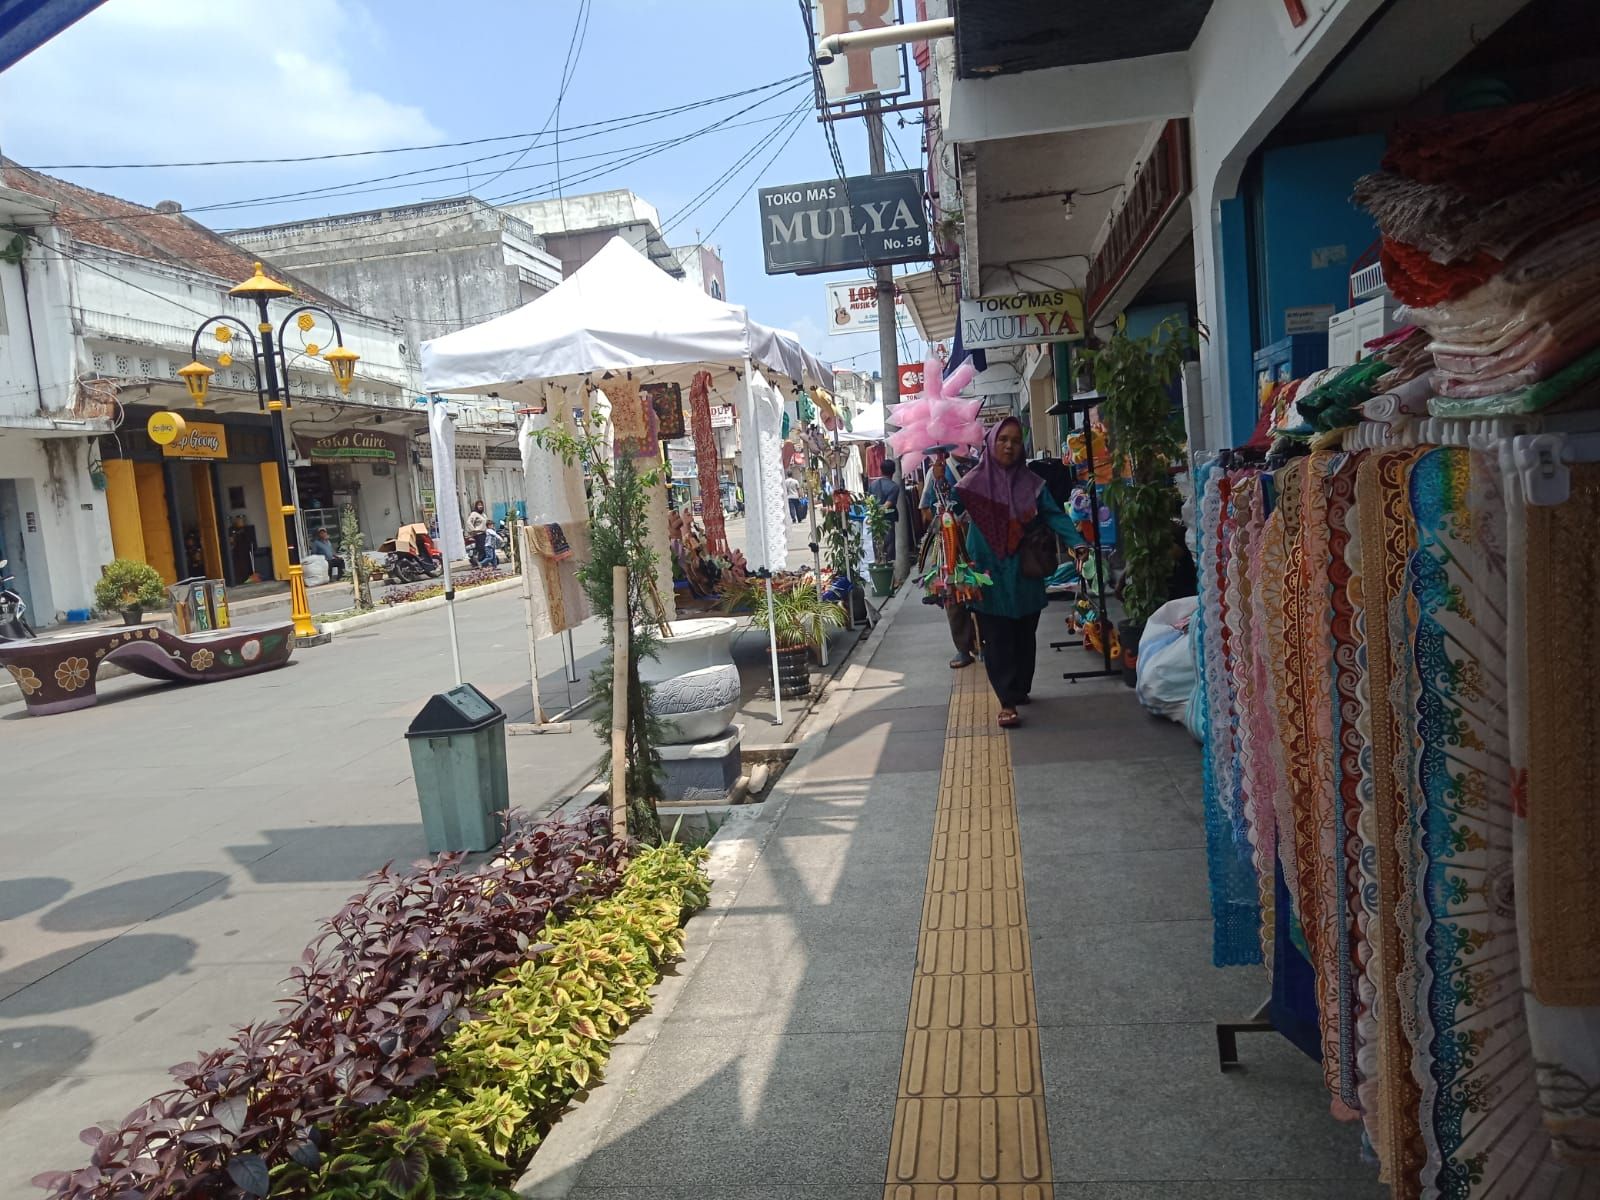 SEJUMLAH tenda PKL mulai terpasang di kawasan pedestrian Cihideung, Kota Tasikmalaya. Hal ini menjadi pertanda bahwa kawasan Cihideung akan kembali dijadikan sebagai kawasan untuk PKL.*